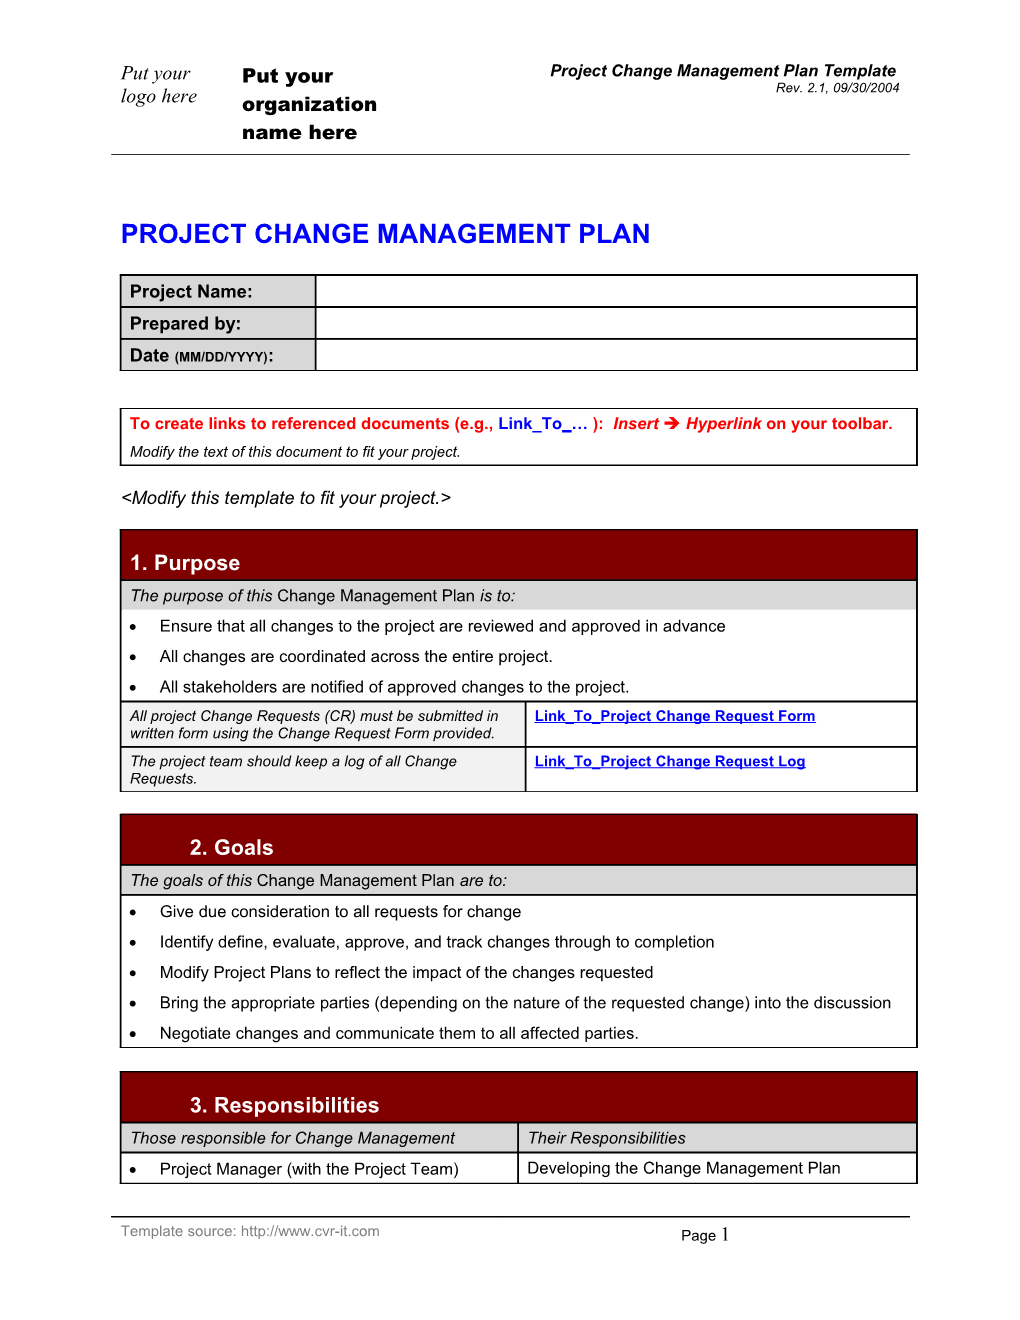 Project Change Management Plan Template